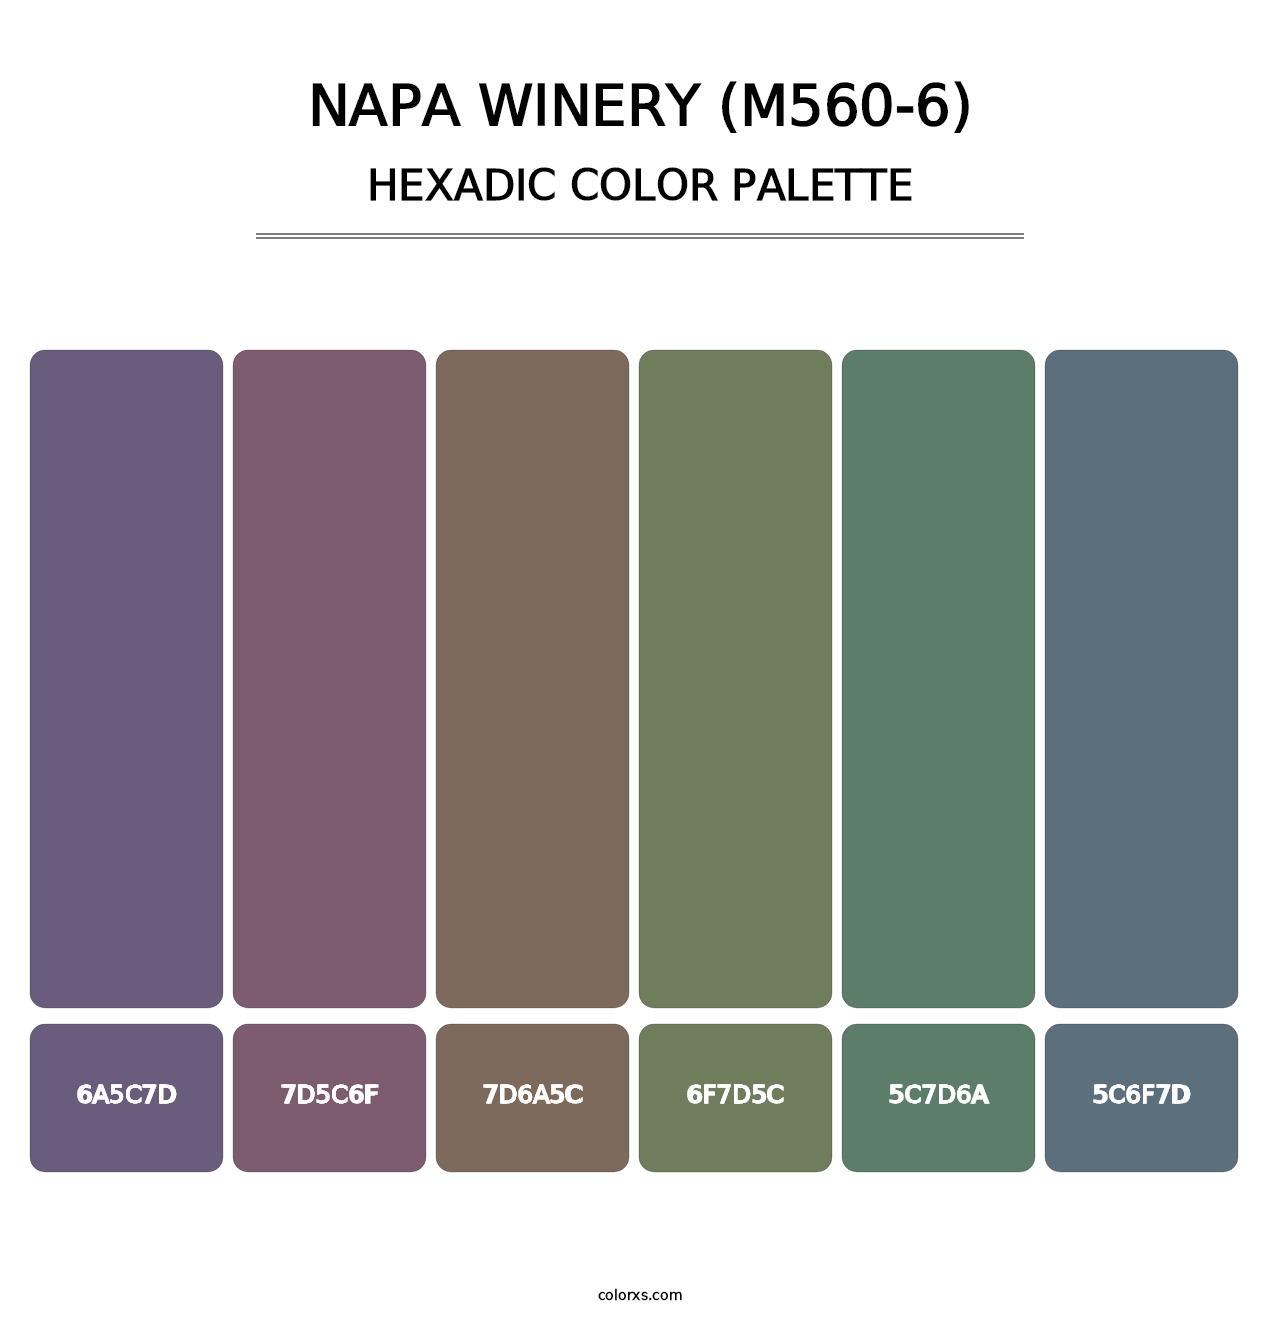 Napa Winery (M560-6) - Hexadic Color Palette